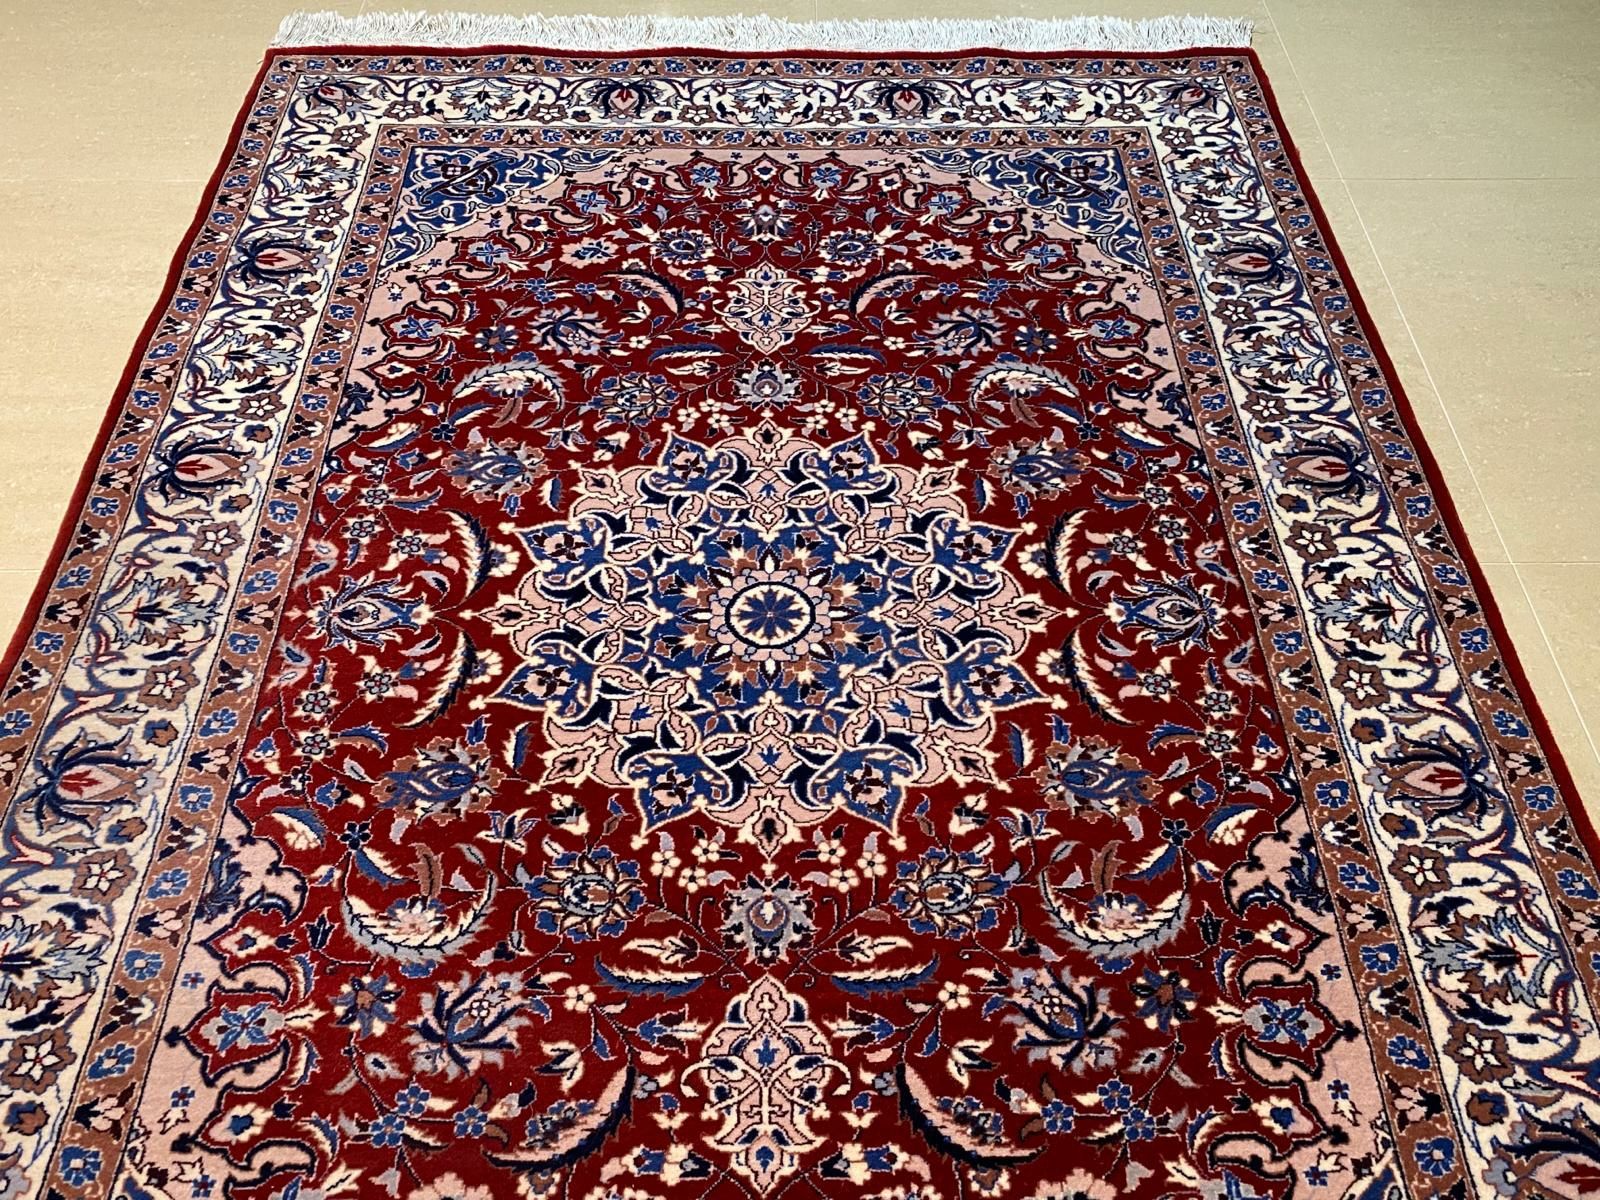 Isfahan Kork Persja 202 # 126 Drobno tkany luksusowy dywan perski